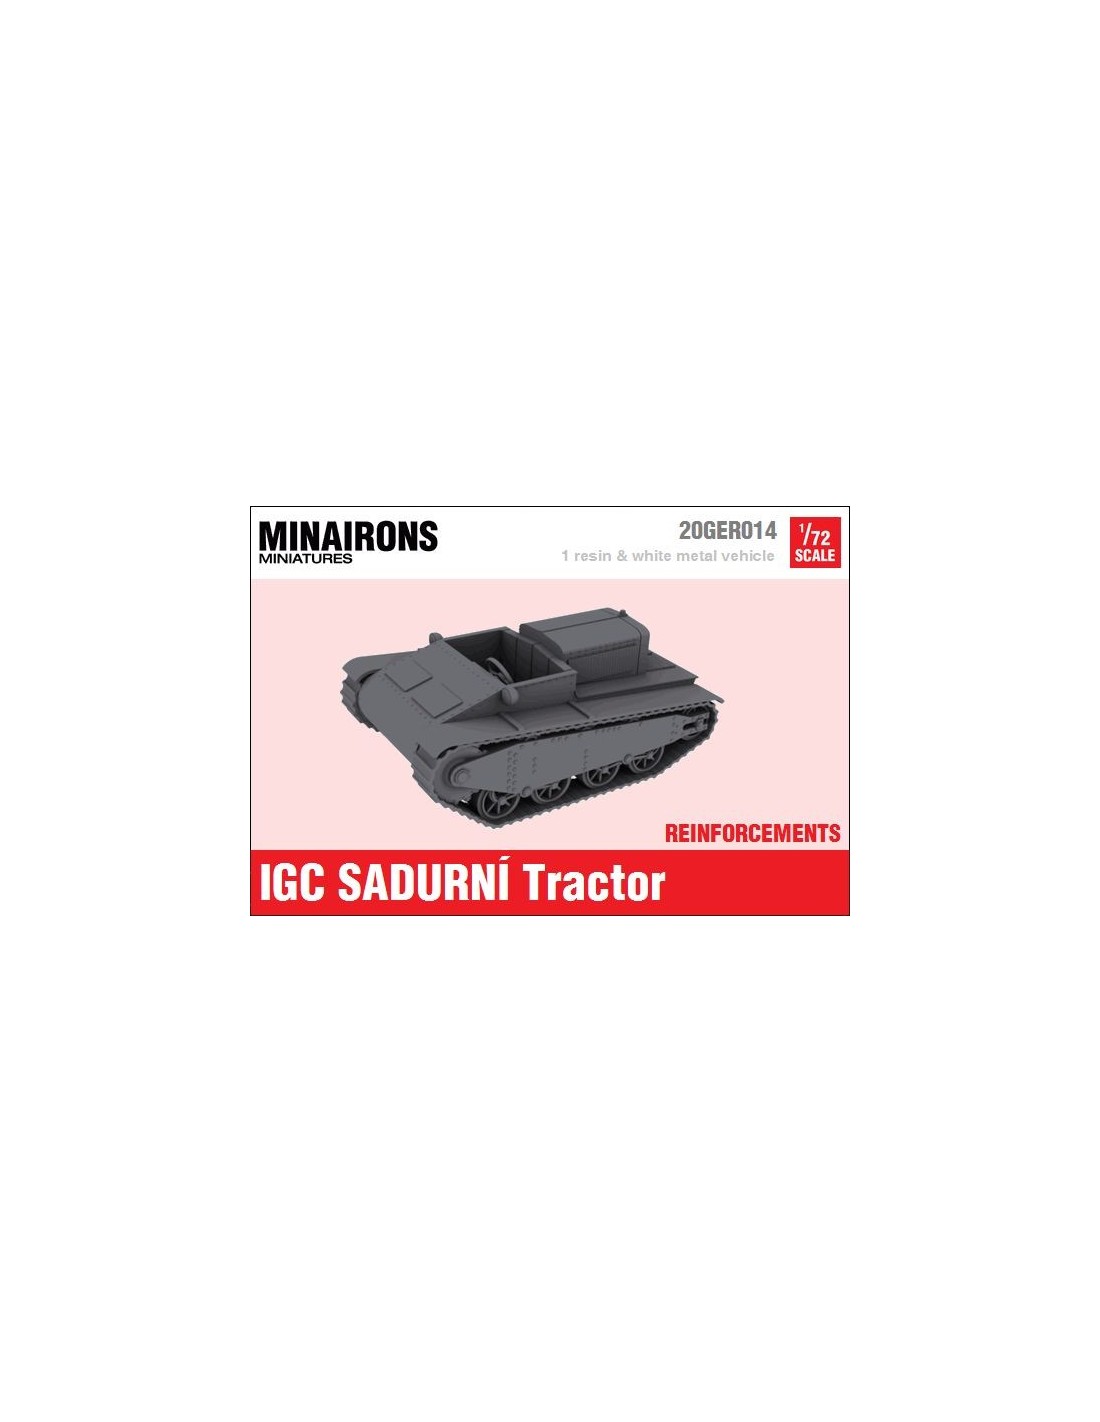 IGC Sadurni Tractor [MNA-20GER014]